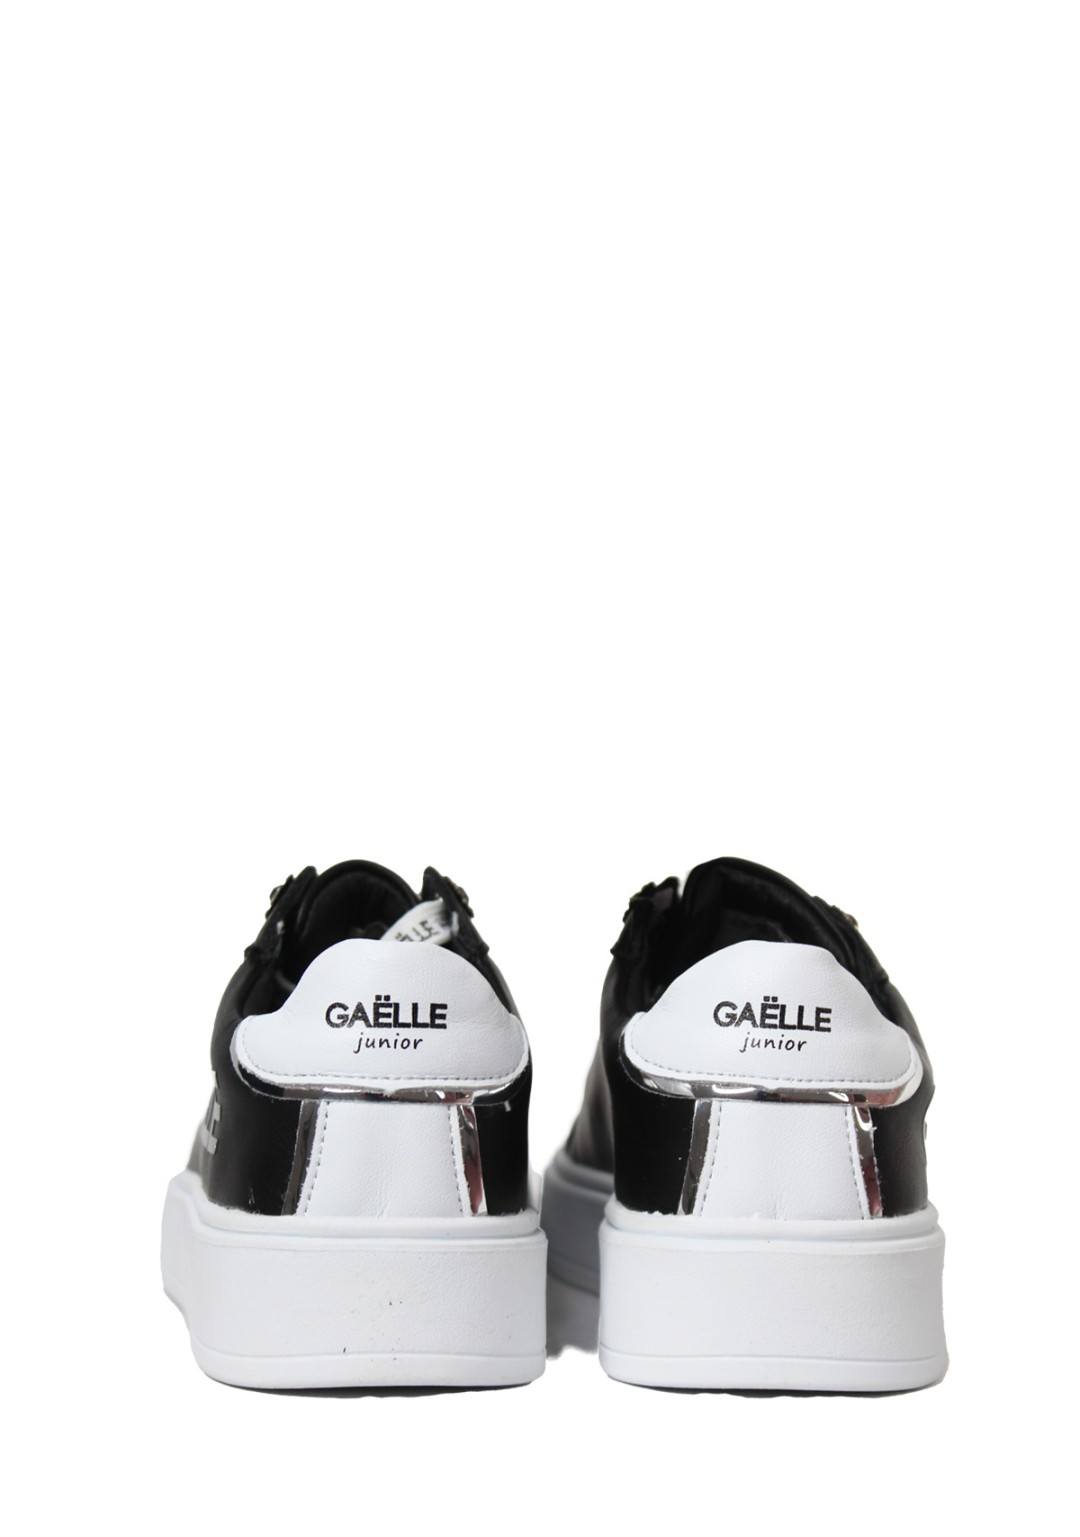 GAëLLE PARIS - Sneaker Scritta - Bambine e ragazze - GS0006L Chloe N